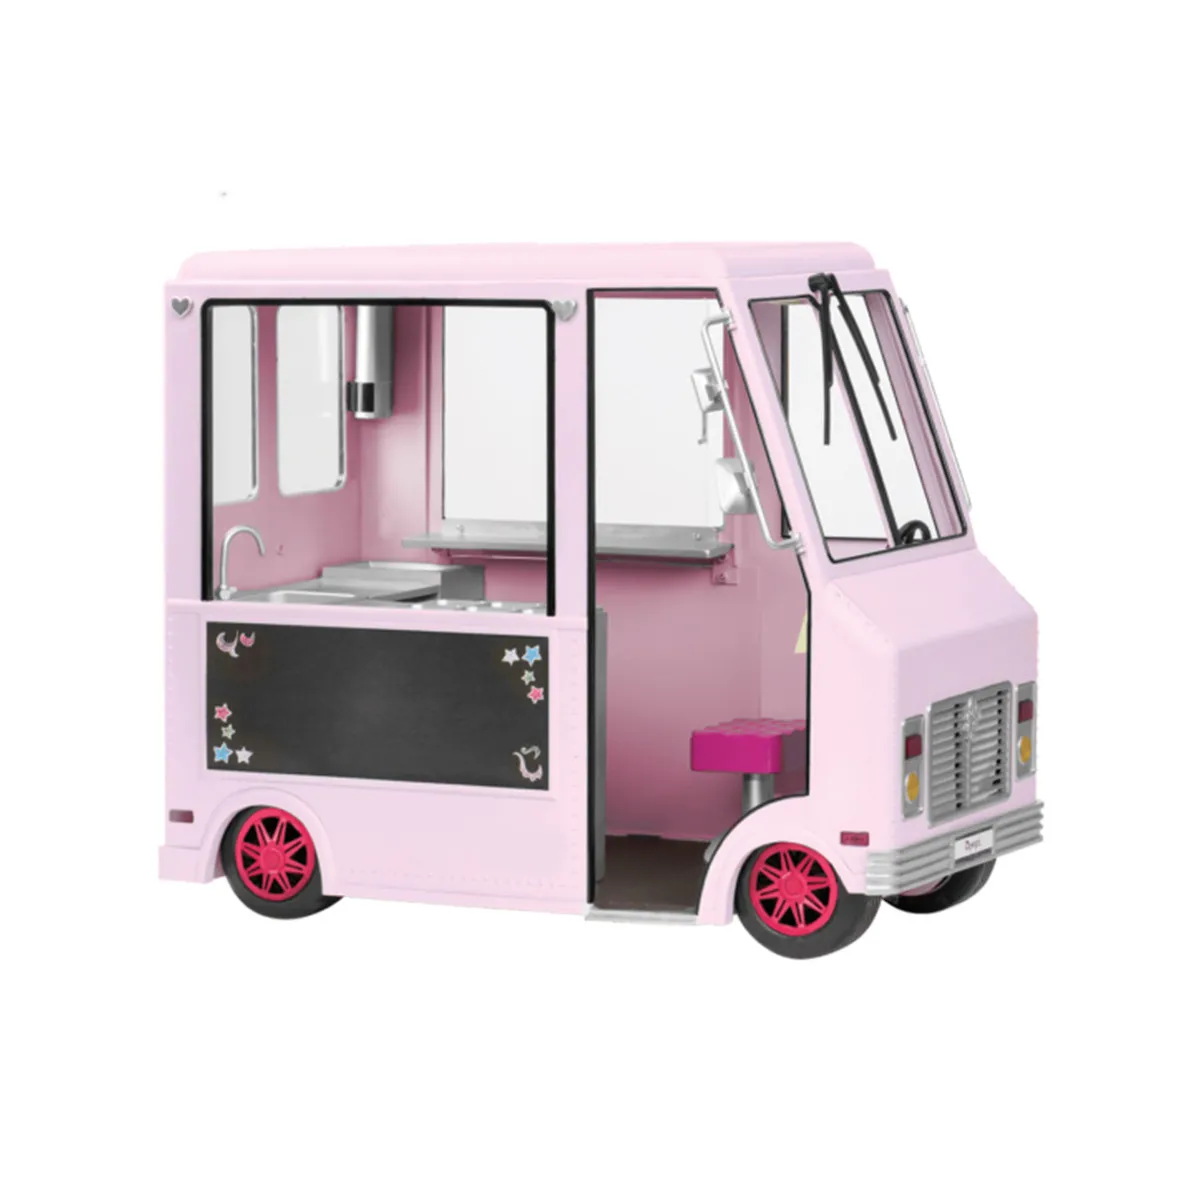 Our Generation kamion za  prodavanje sladoled